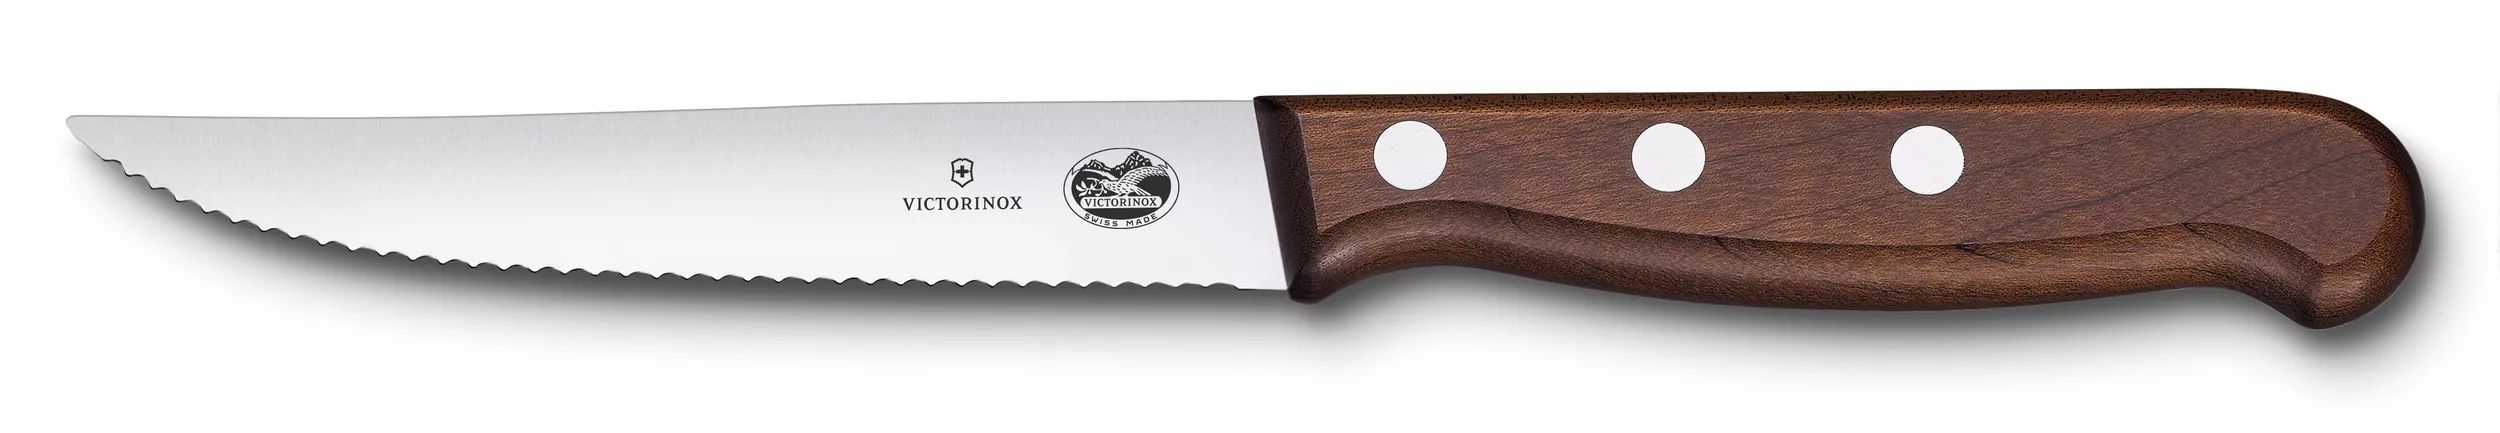 Set de cuchillos para bistec Wood, 2 piezas - null